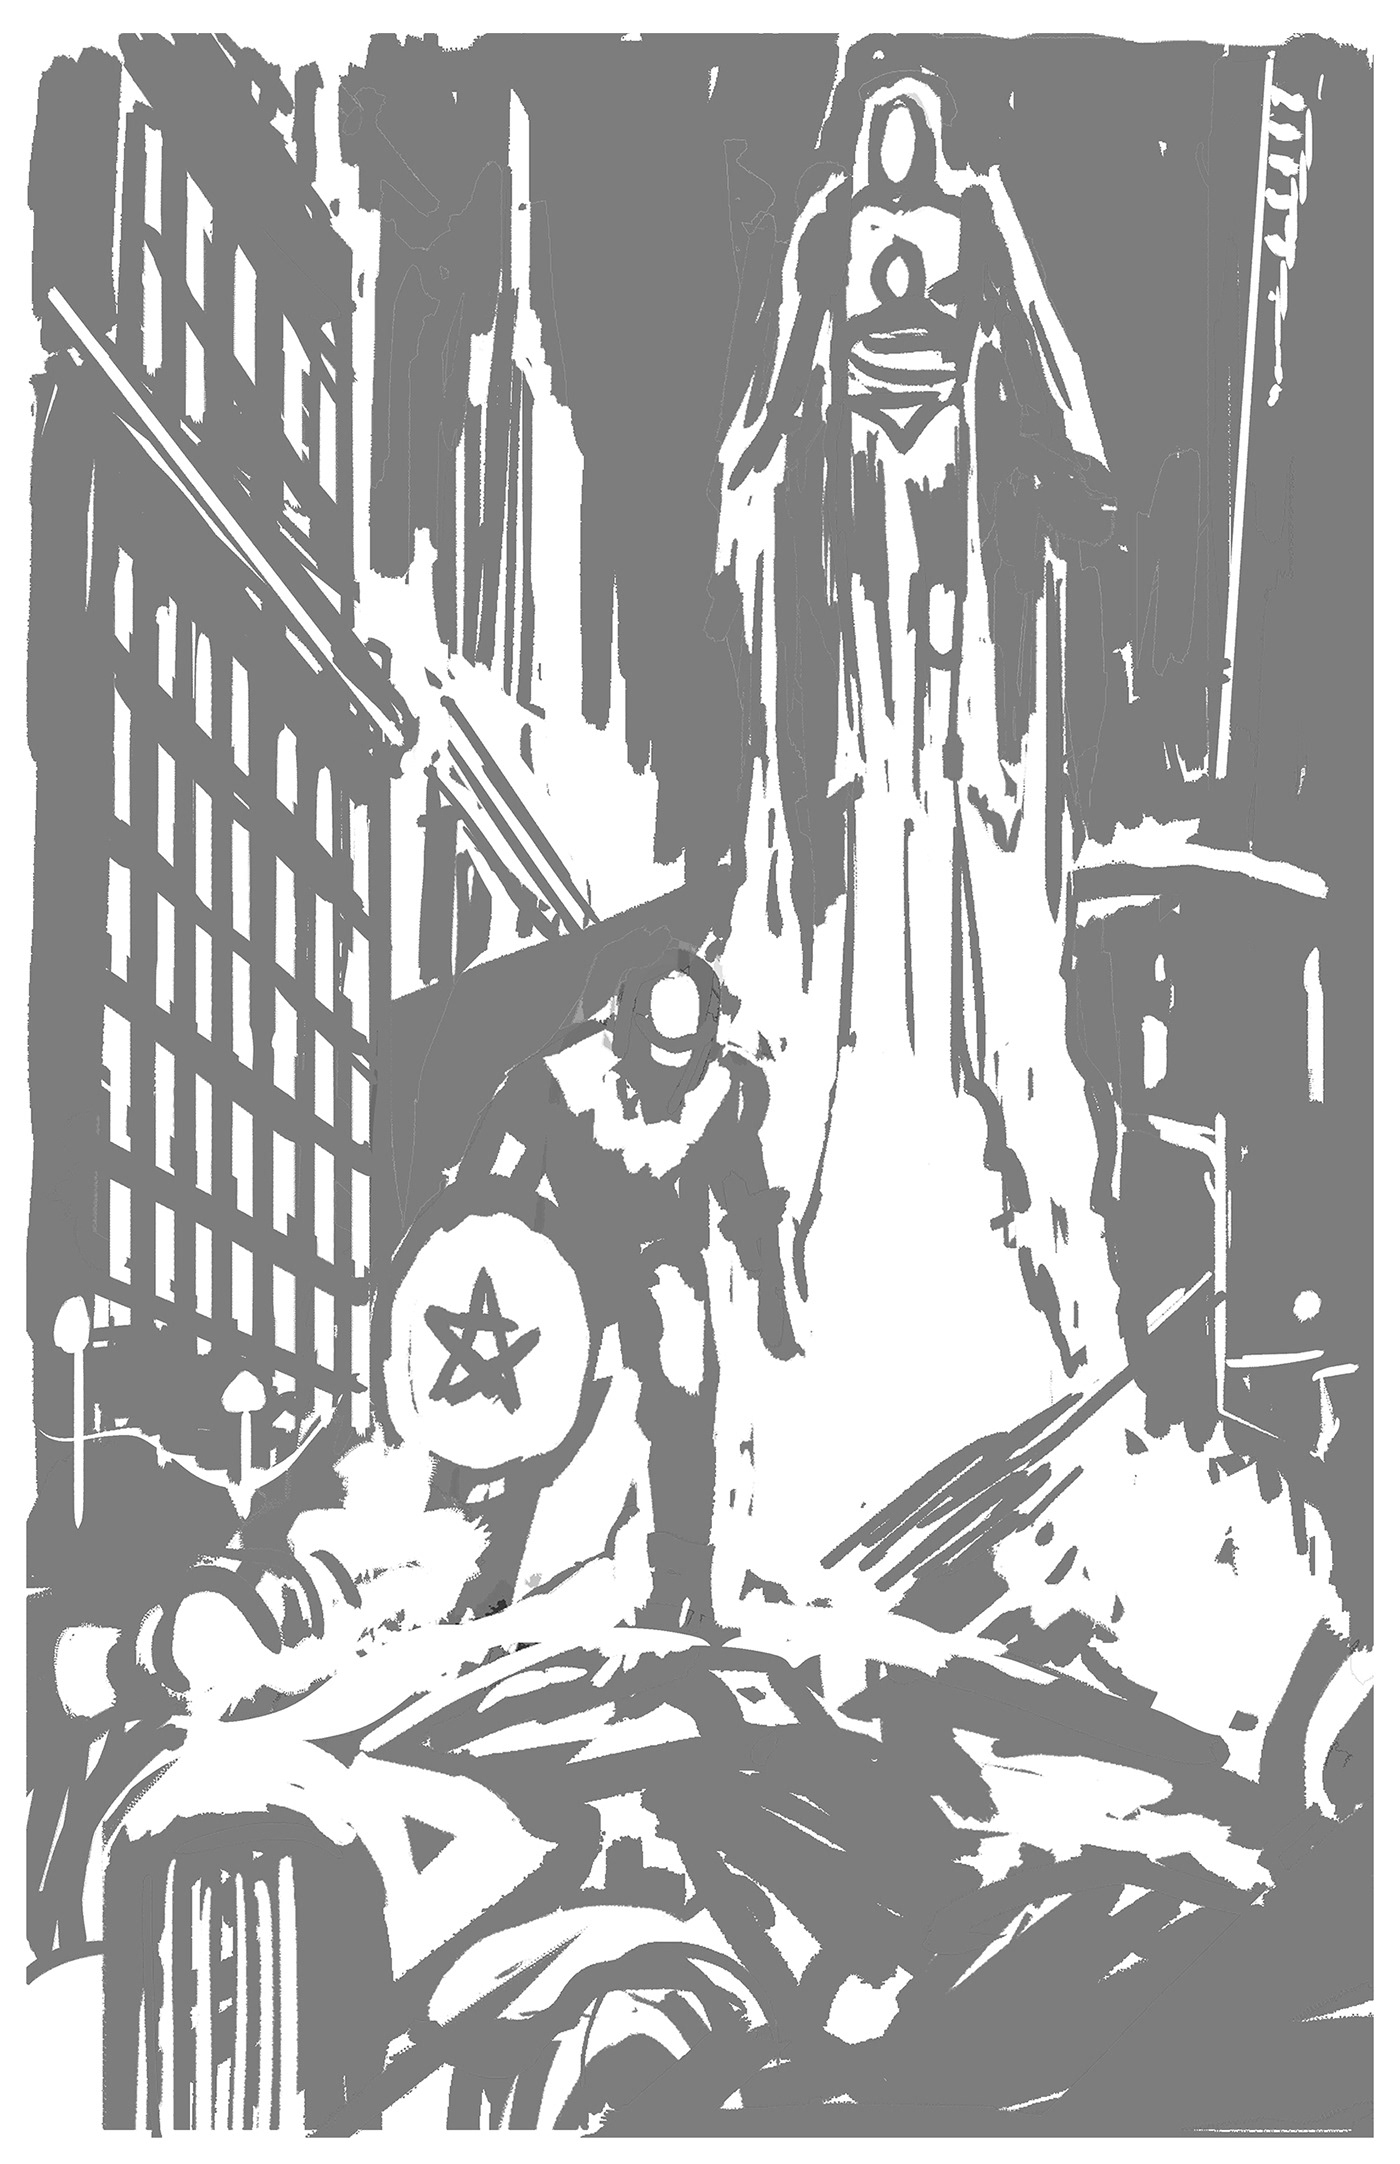 iron man captain america marvel marvel comics comics black and white inking